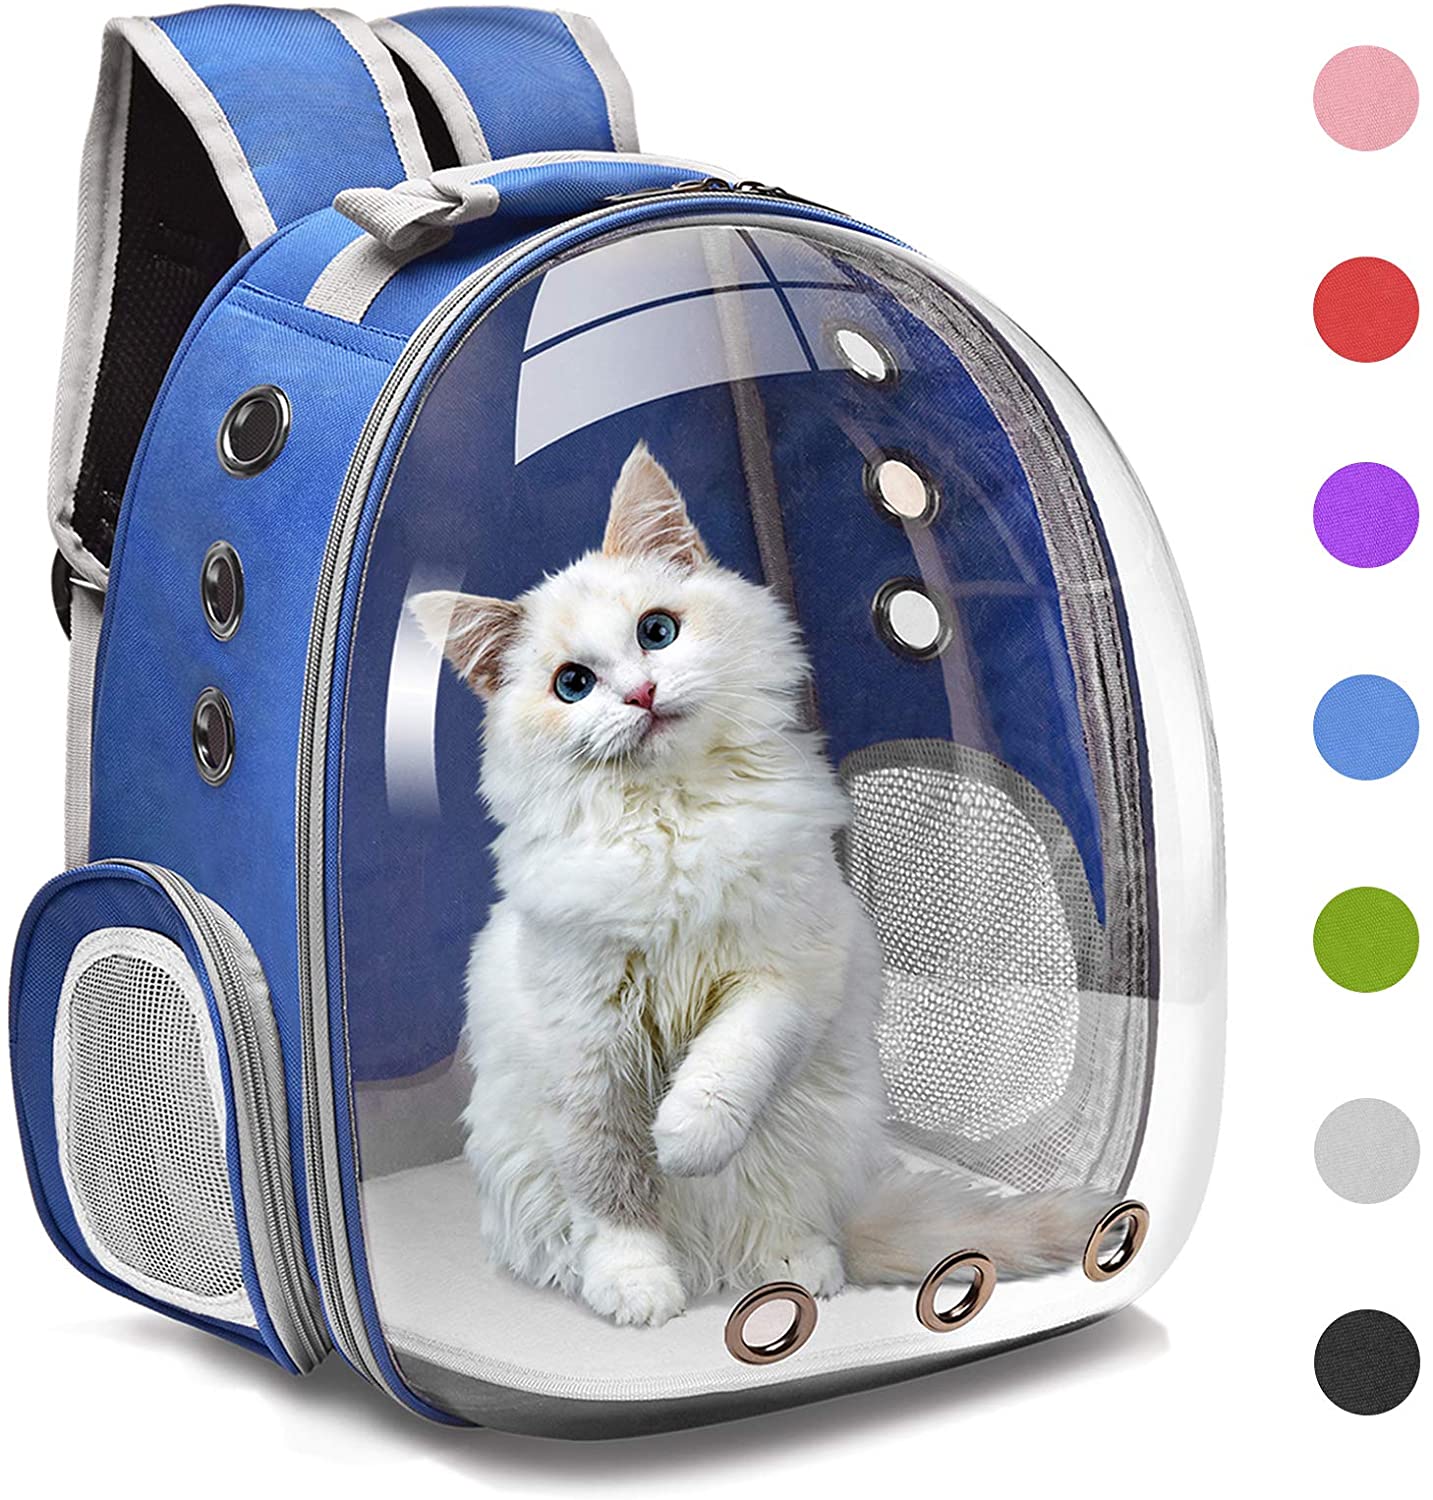 Henkelion Small Blue Space Capsule Dog Backpack